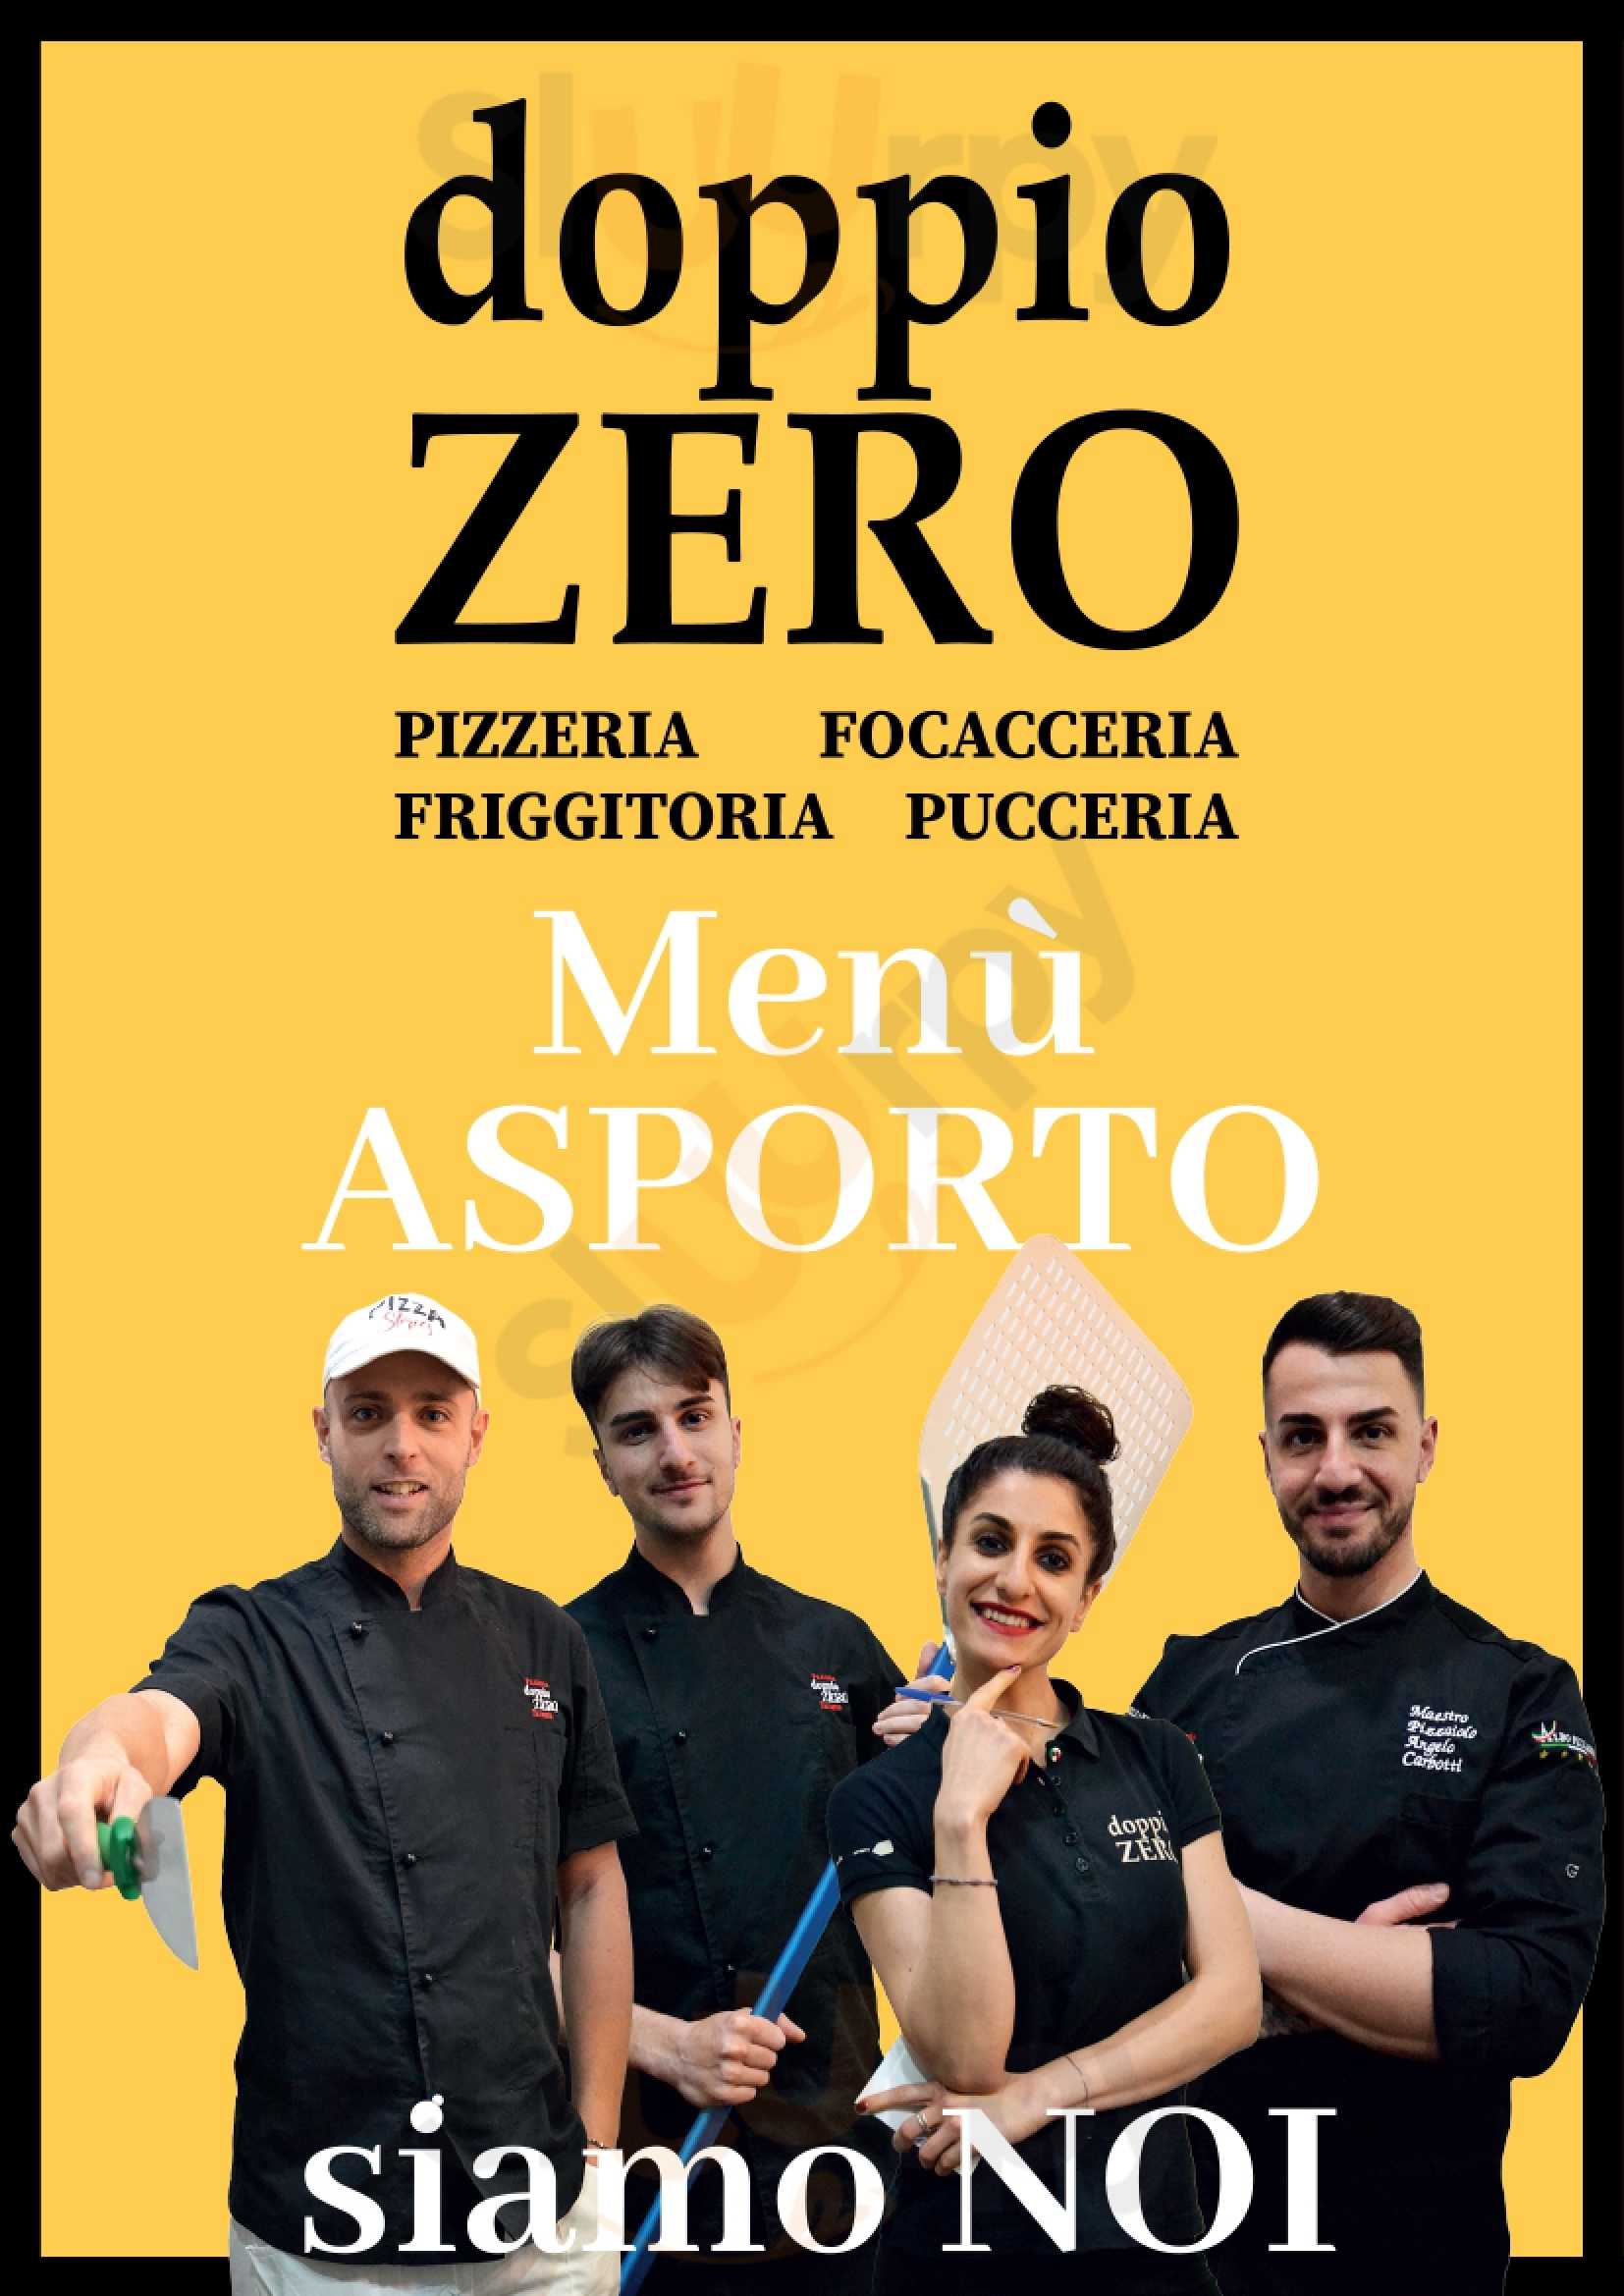 Pizzeria Doppio Zero Taranto menù 1 pagina